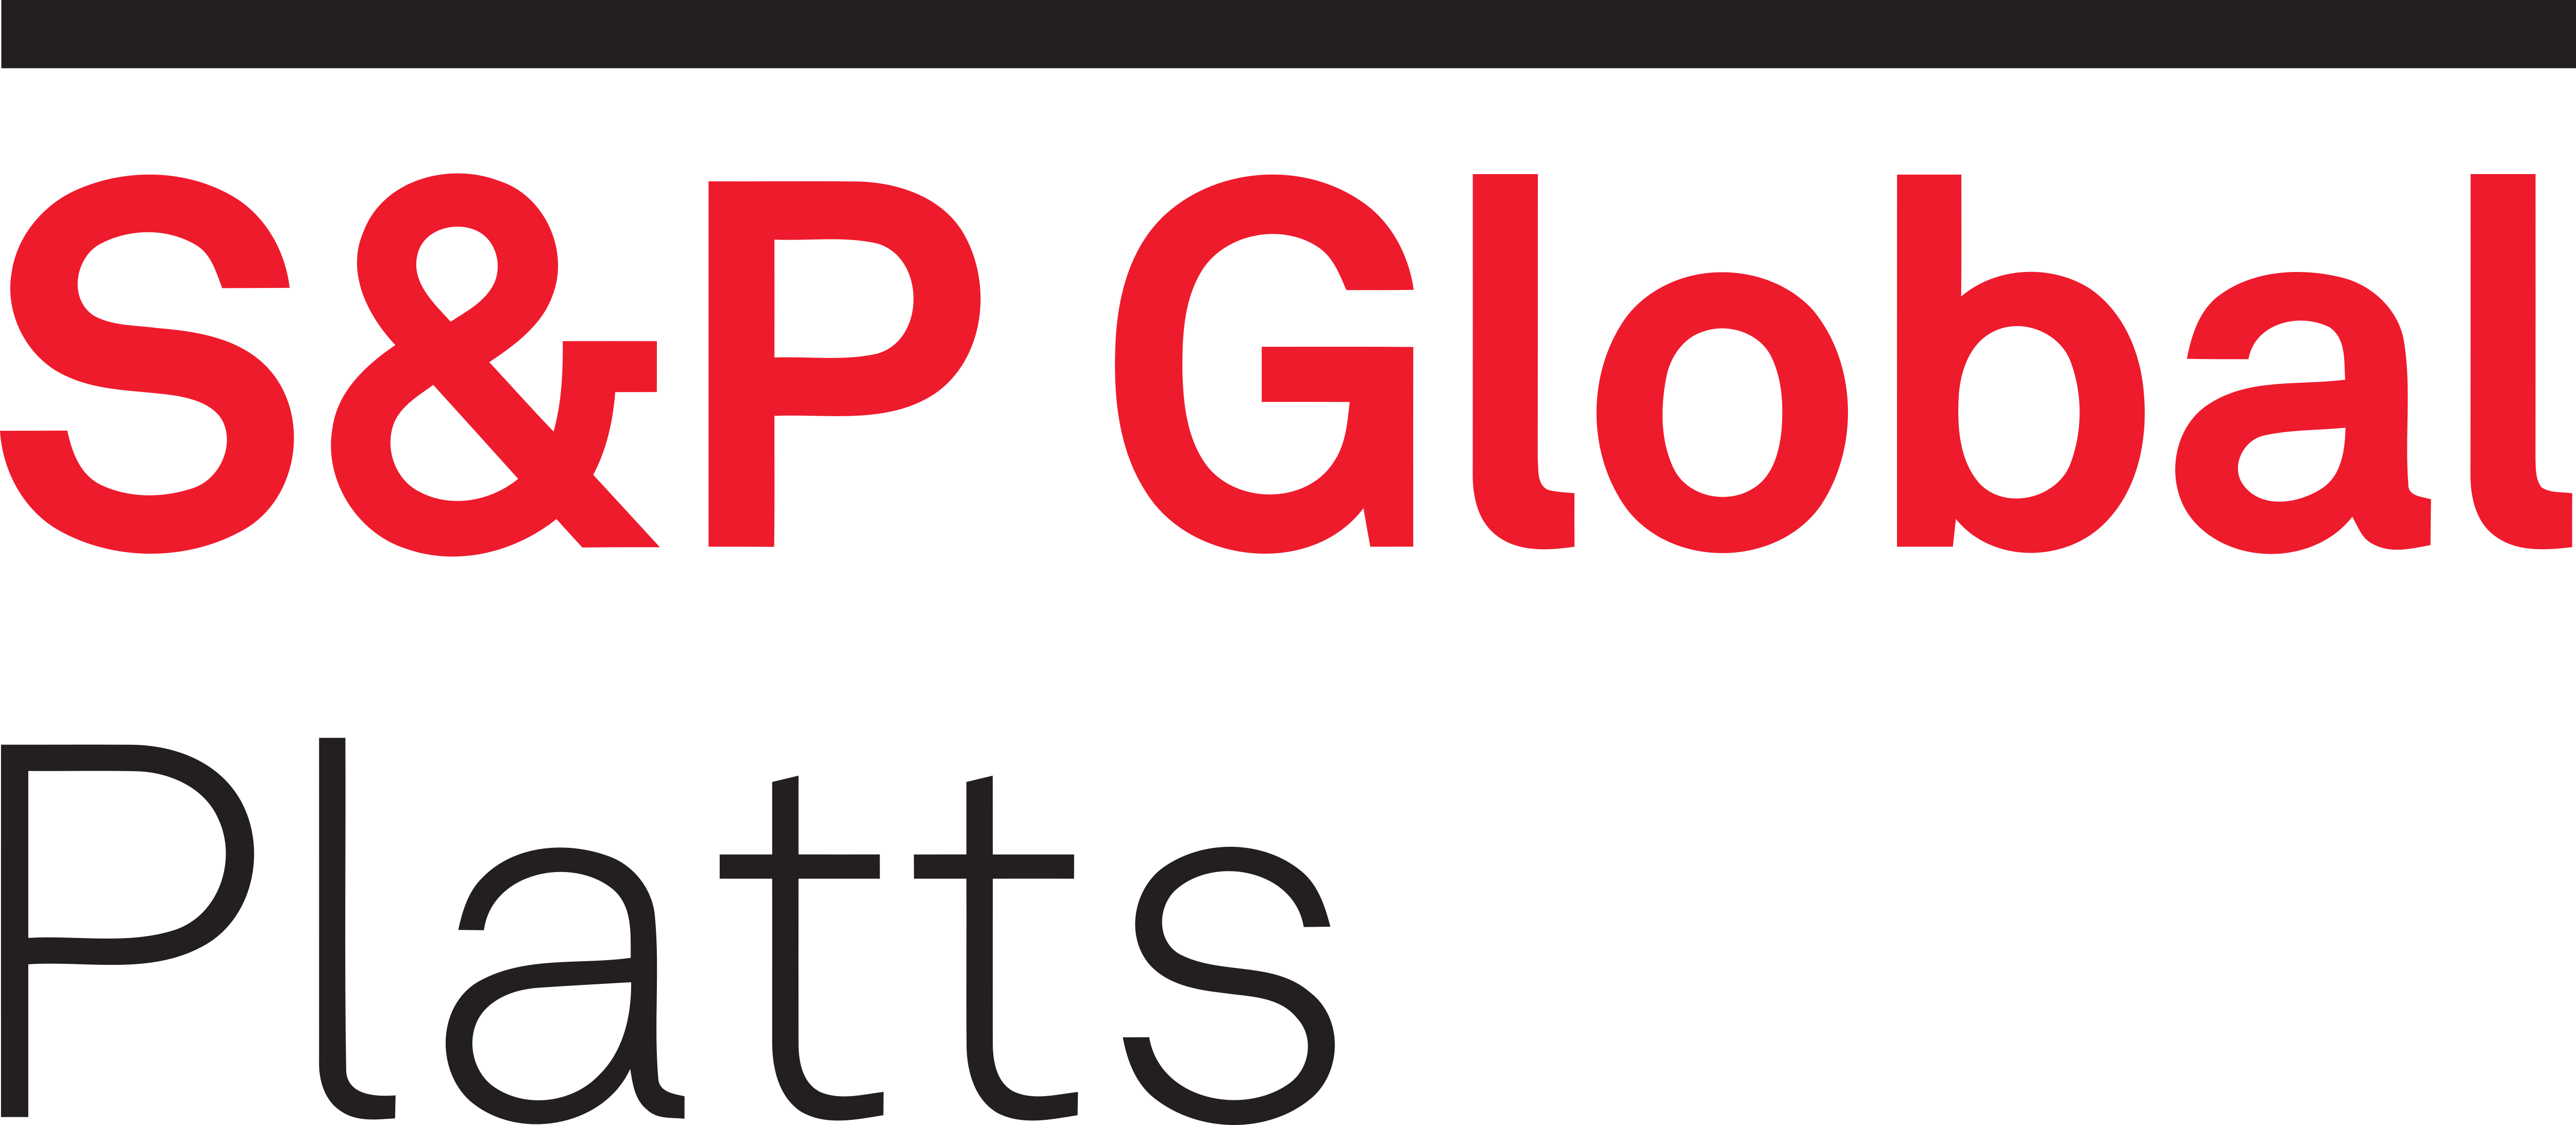 Platts_Logo.png